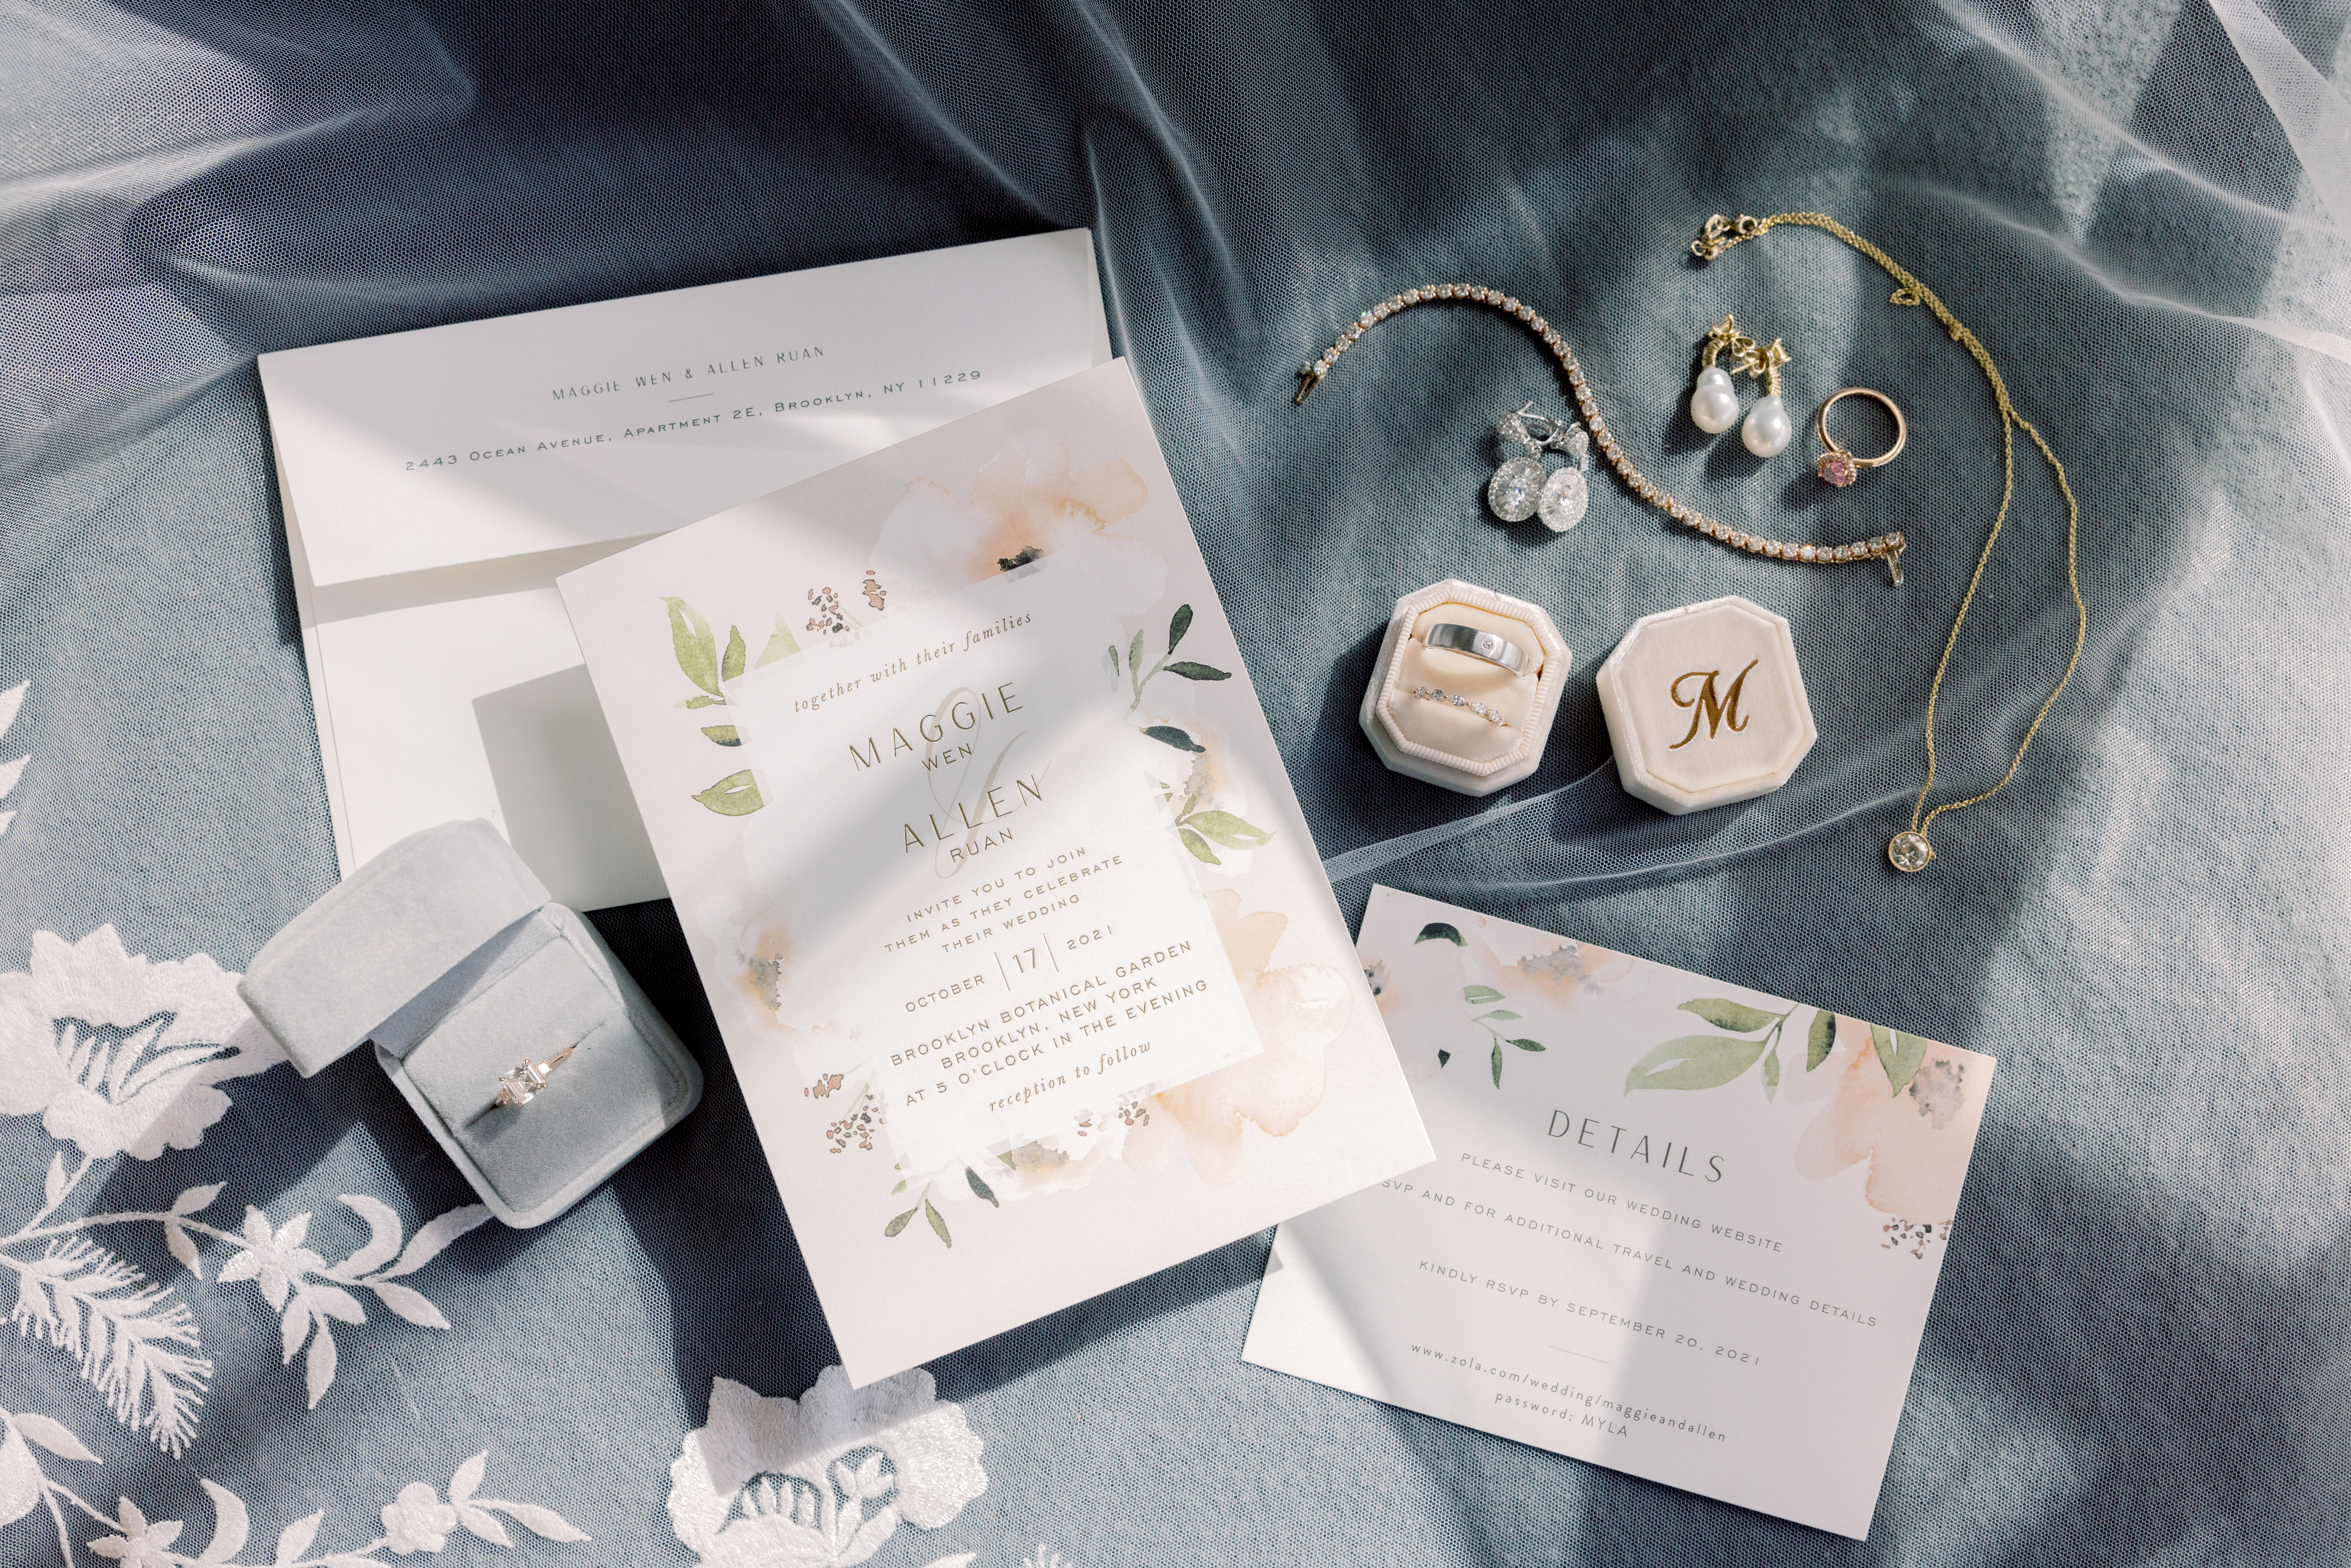 Wedding jewelries and invitation. Wedding accessories image by Jenny Fu Studio.